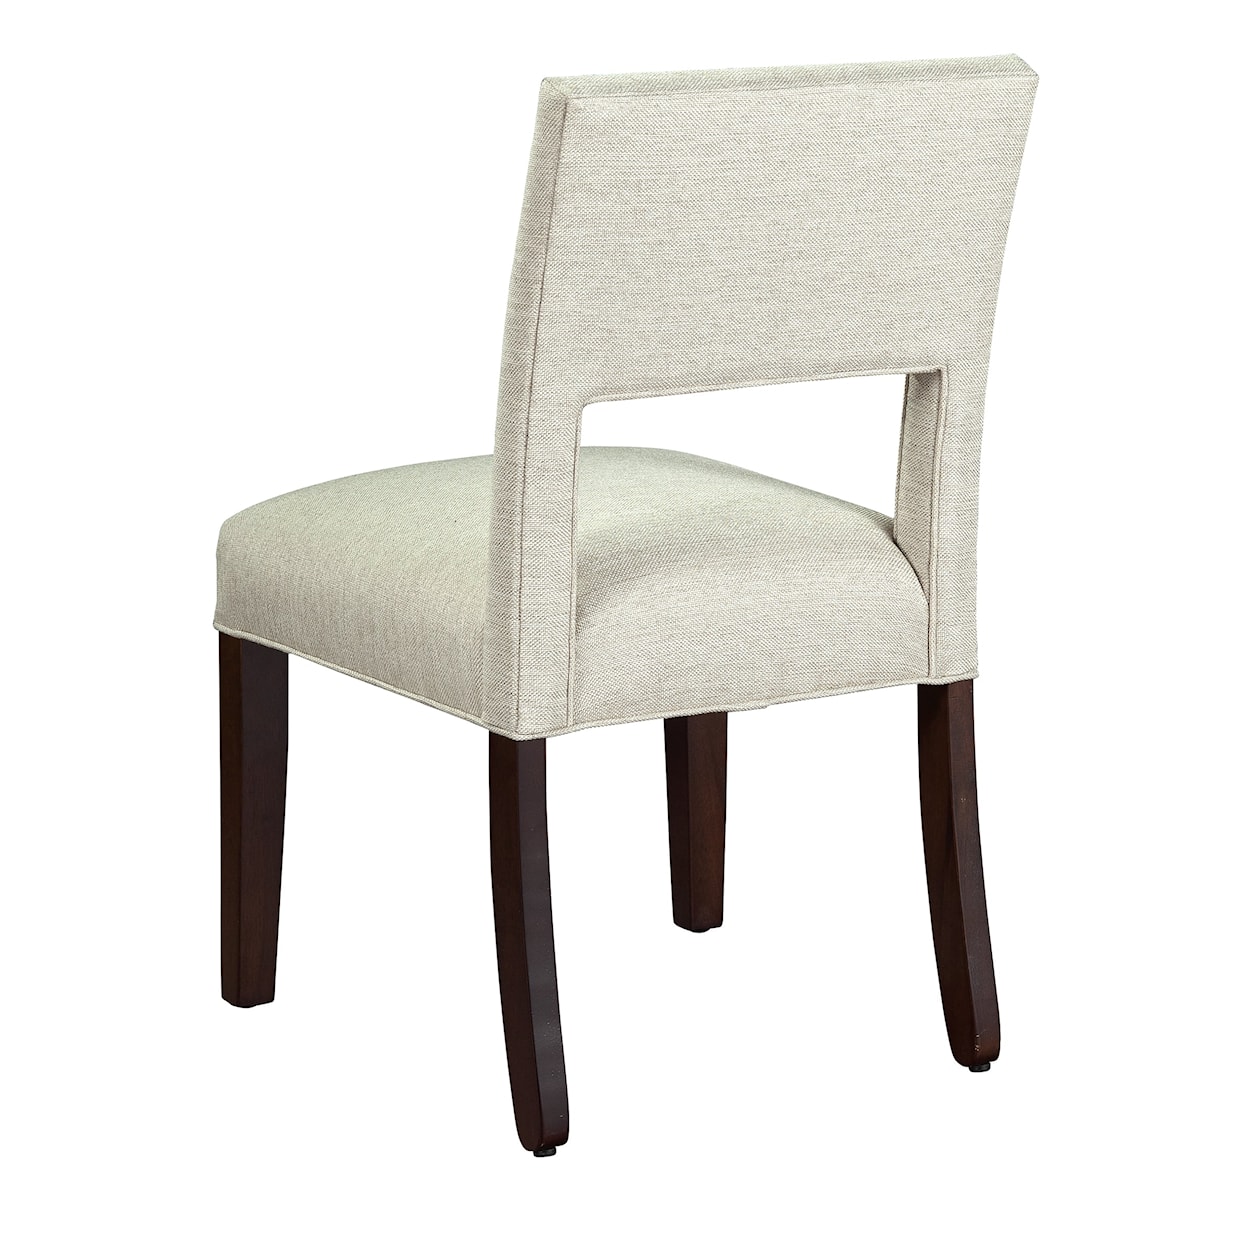 Hekman Upholstery Maddox Dining Chair